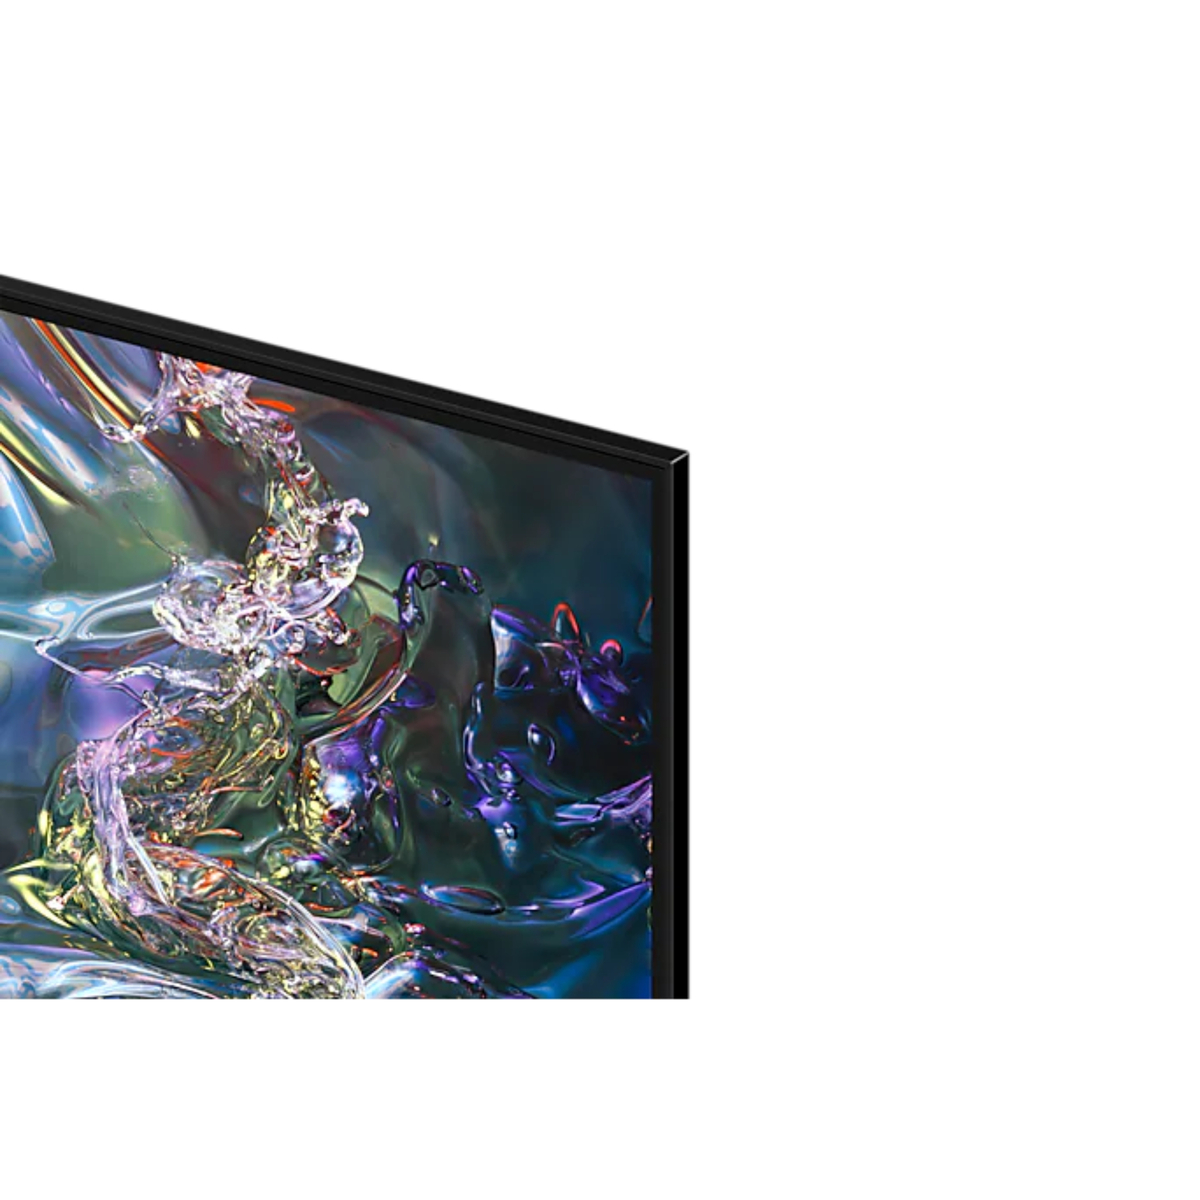 Samsung 85 inches QLED 4K Smart TV, Black, QA85Q60DAUXZN